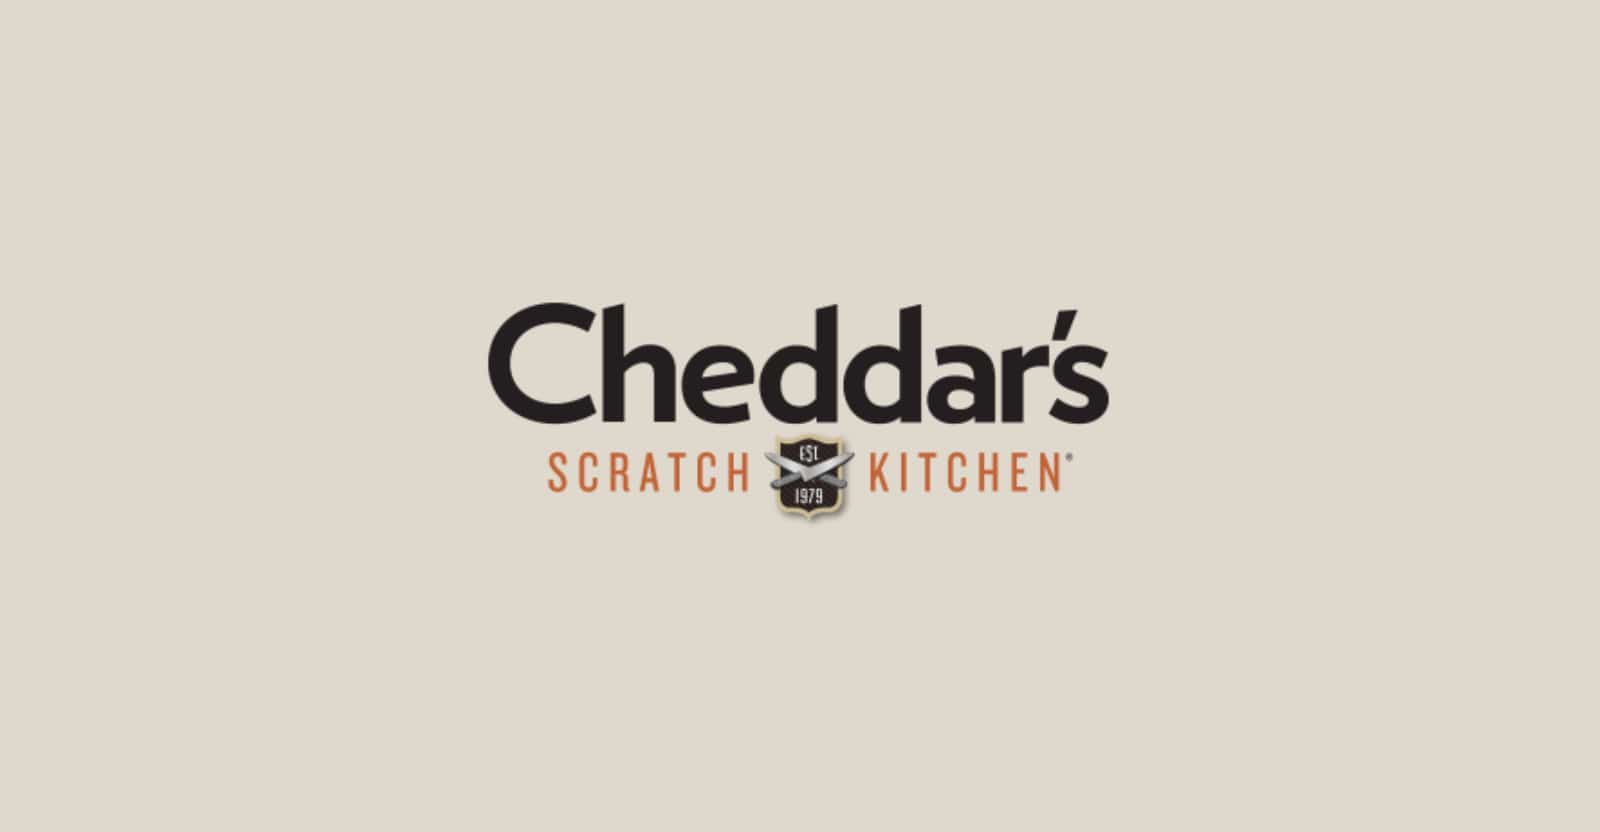 cheddar's gluten-free menu